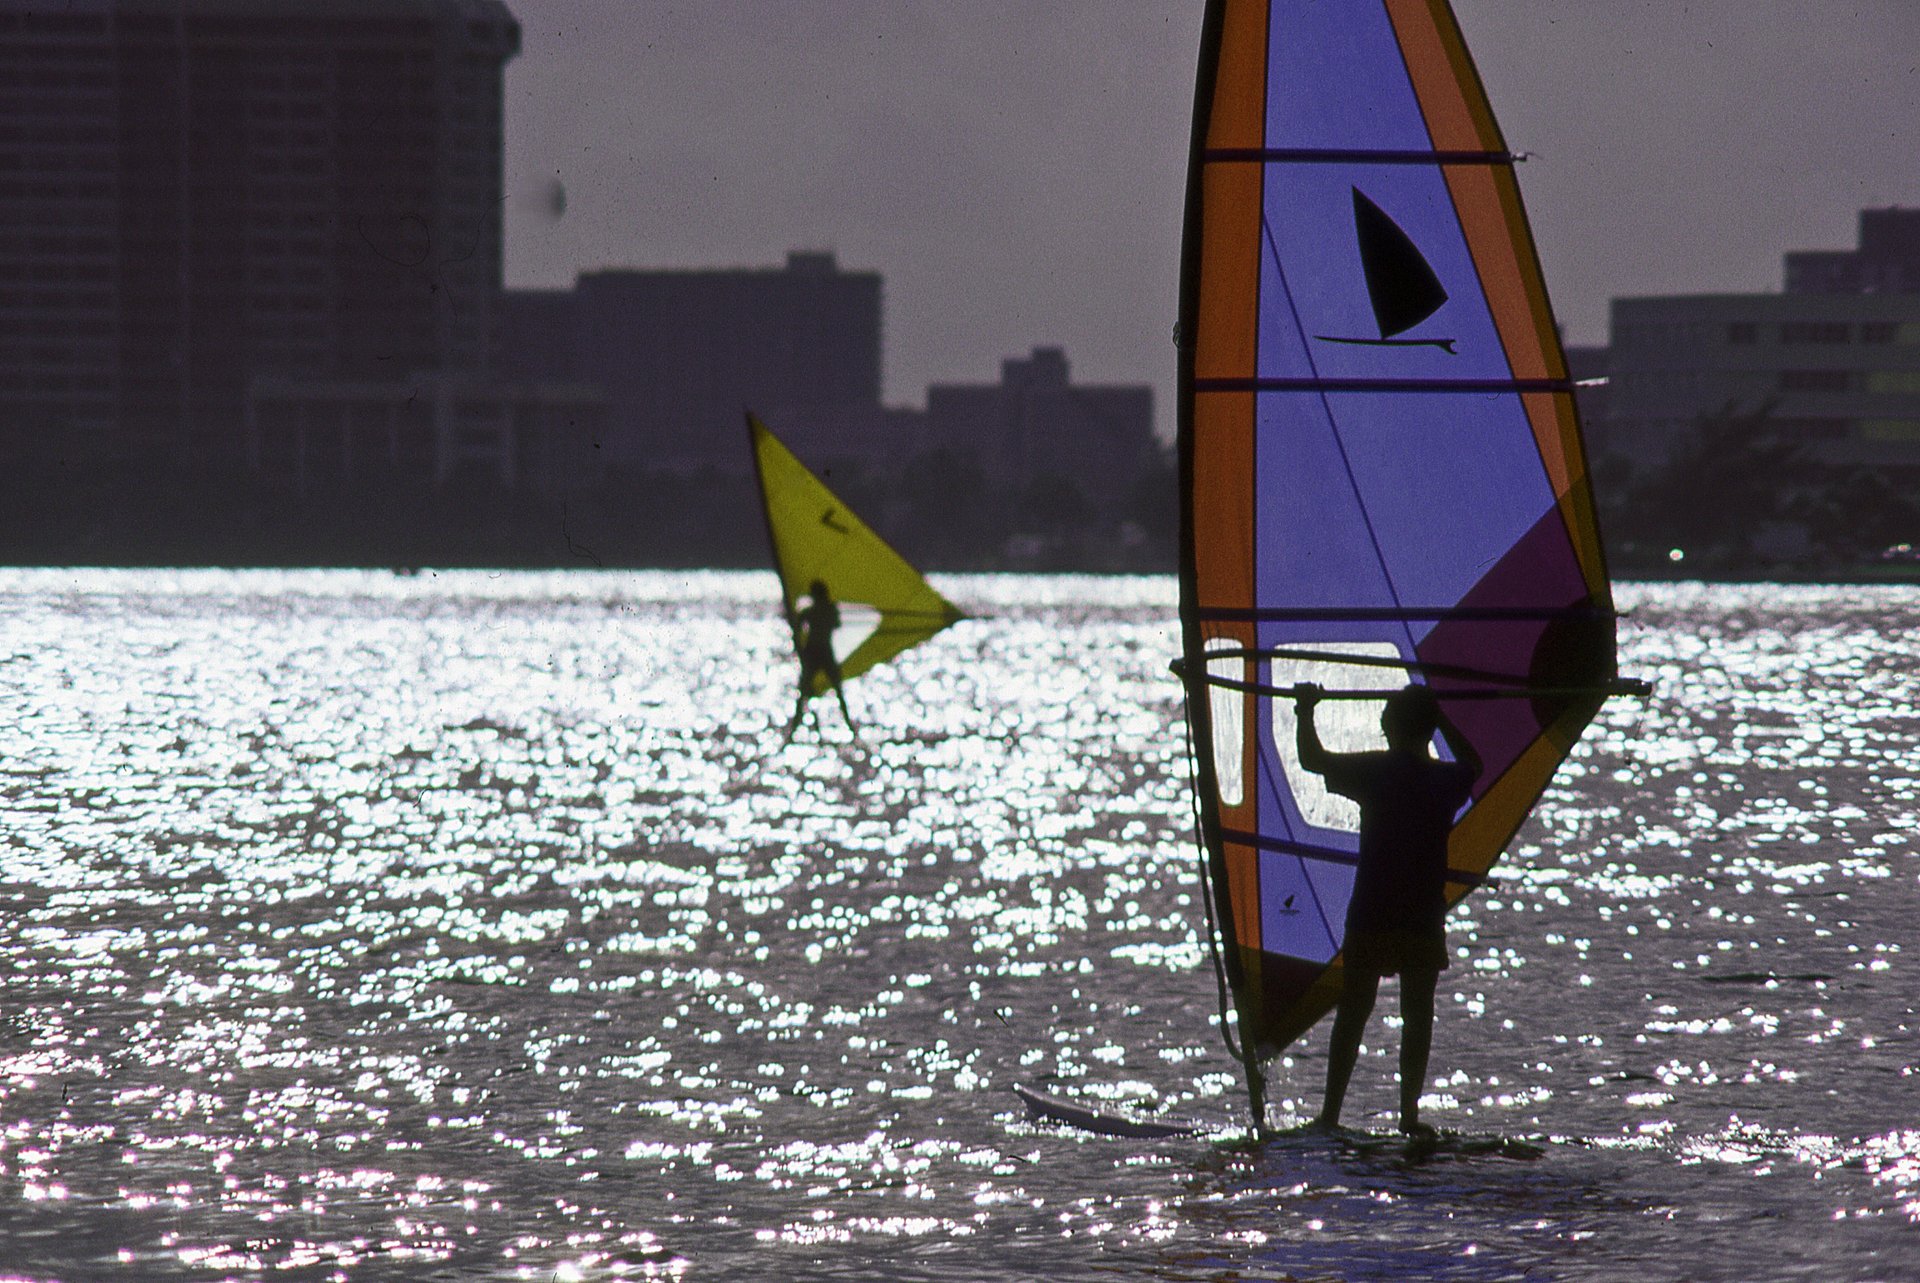 Kiteboarding e windsurf